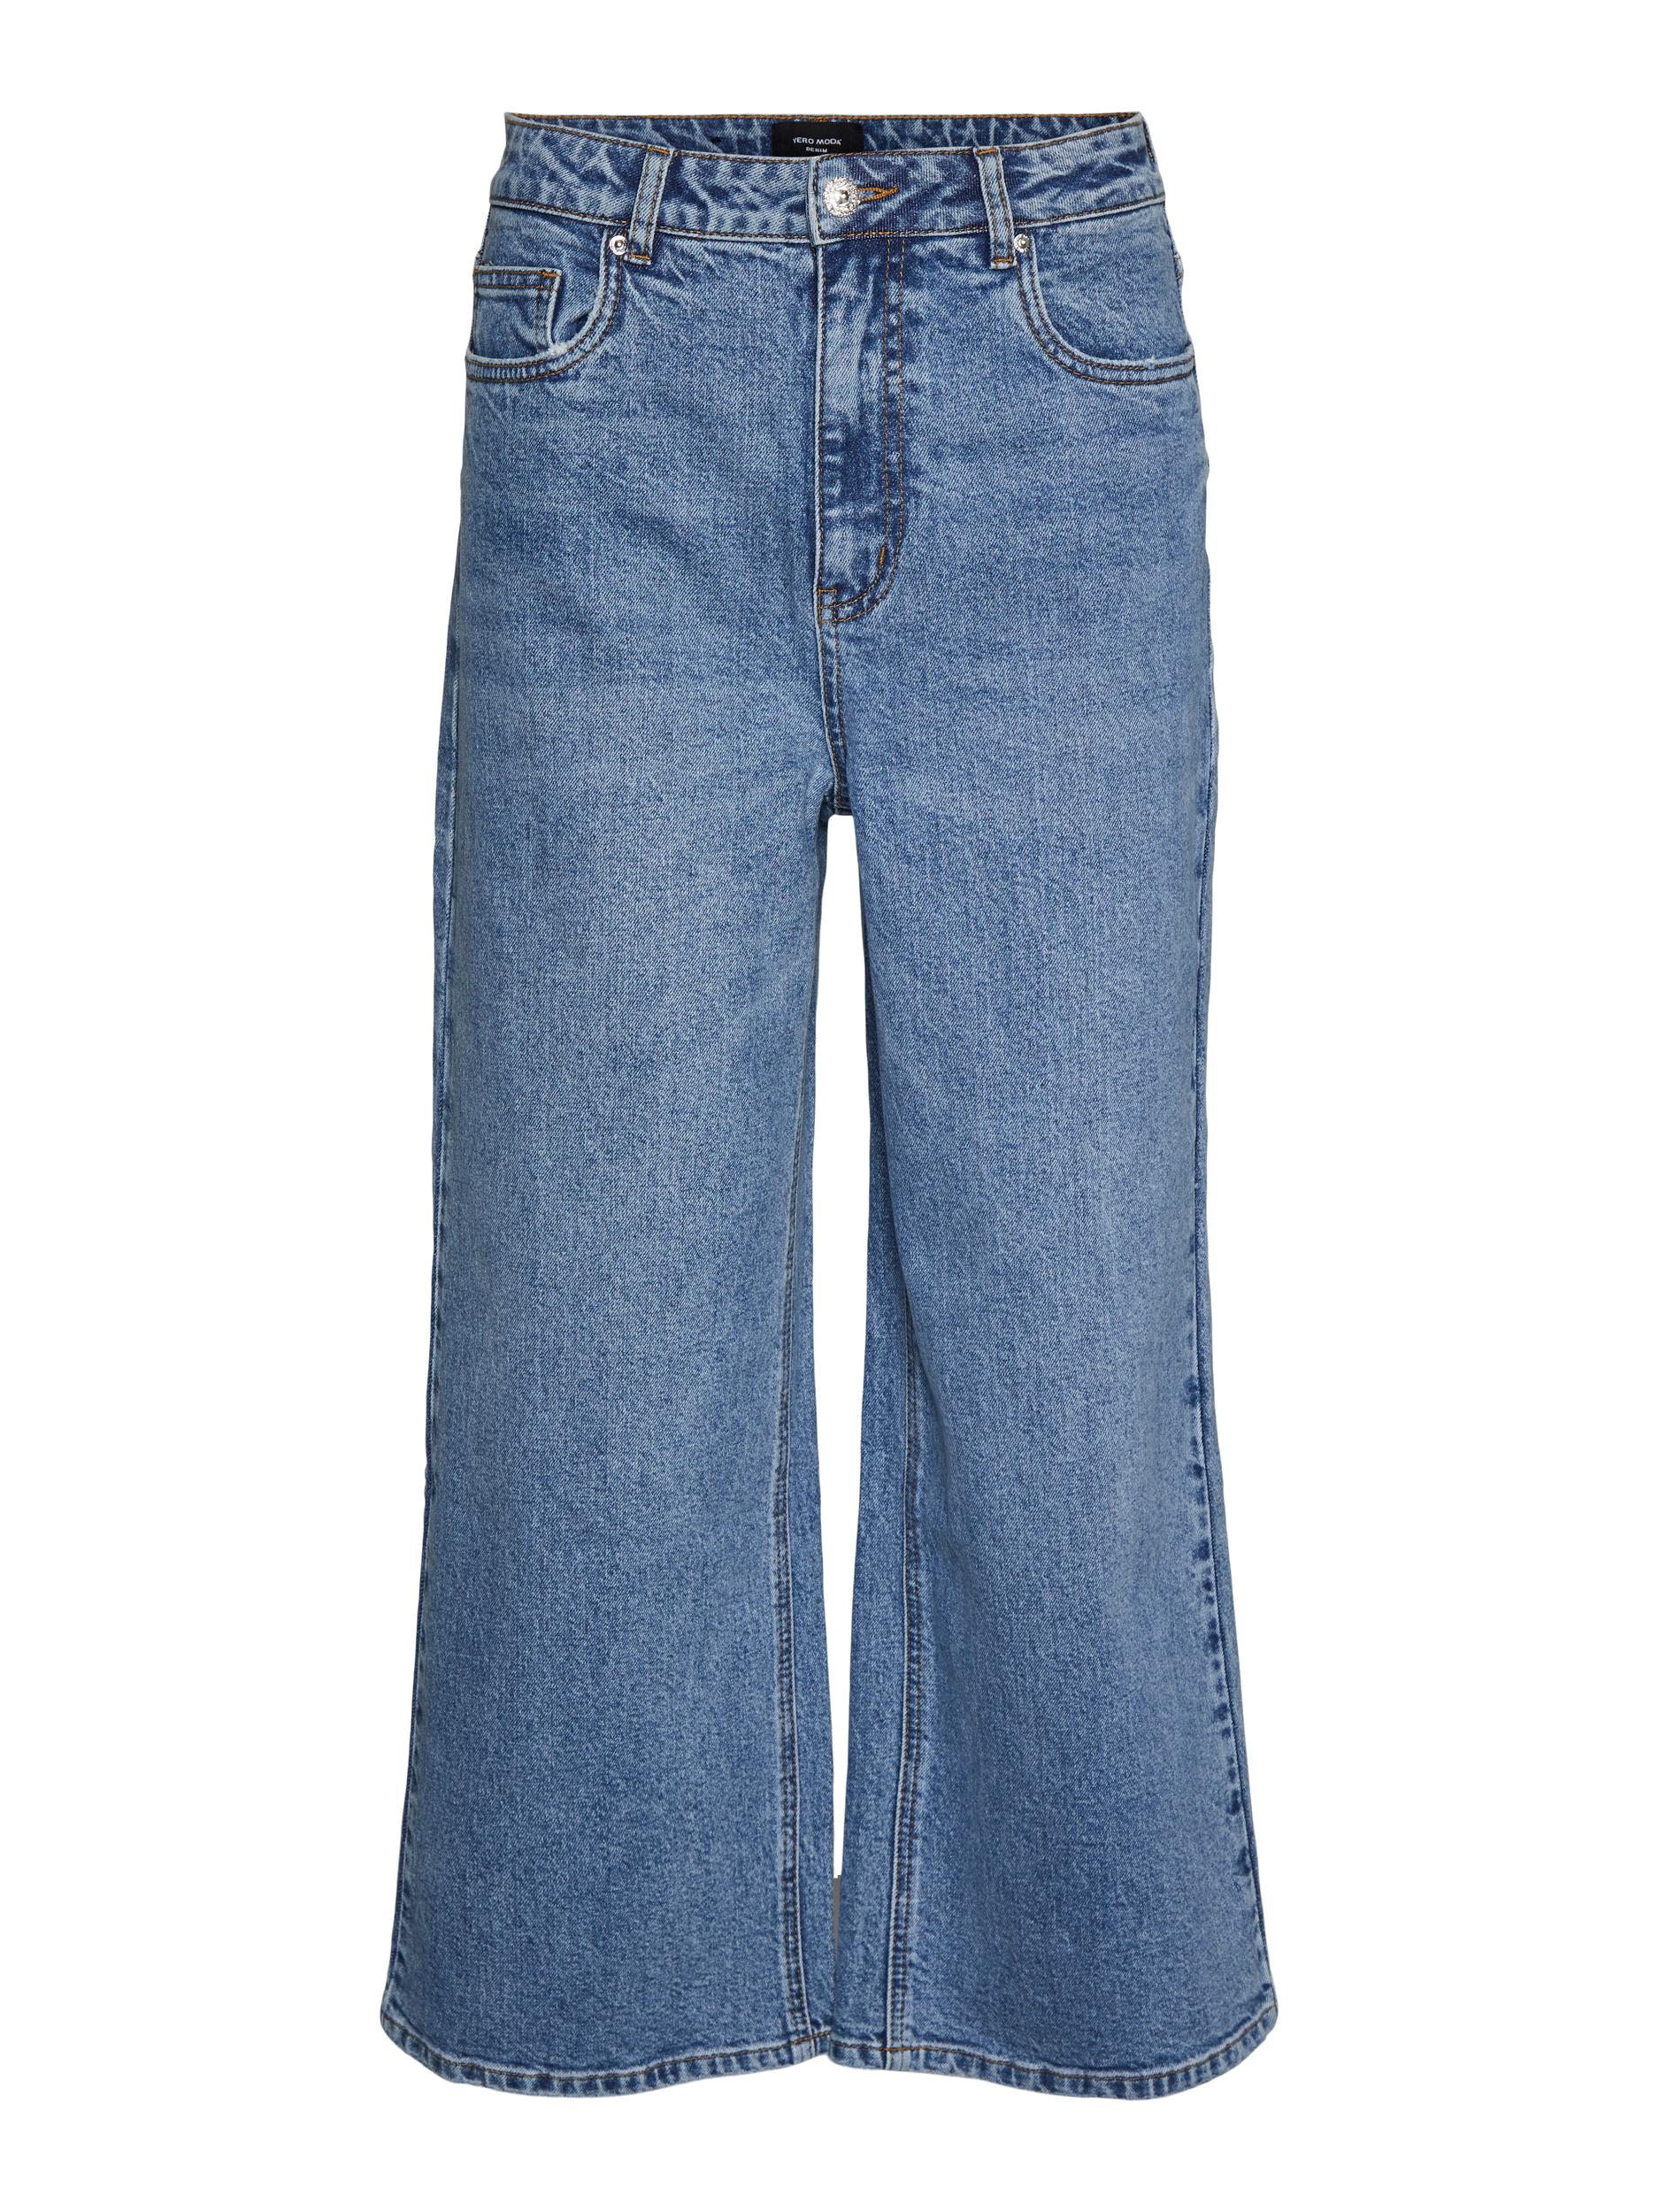 Vero Moda Kathy Jeans, Light Blue Denim, W29/L32